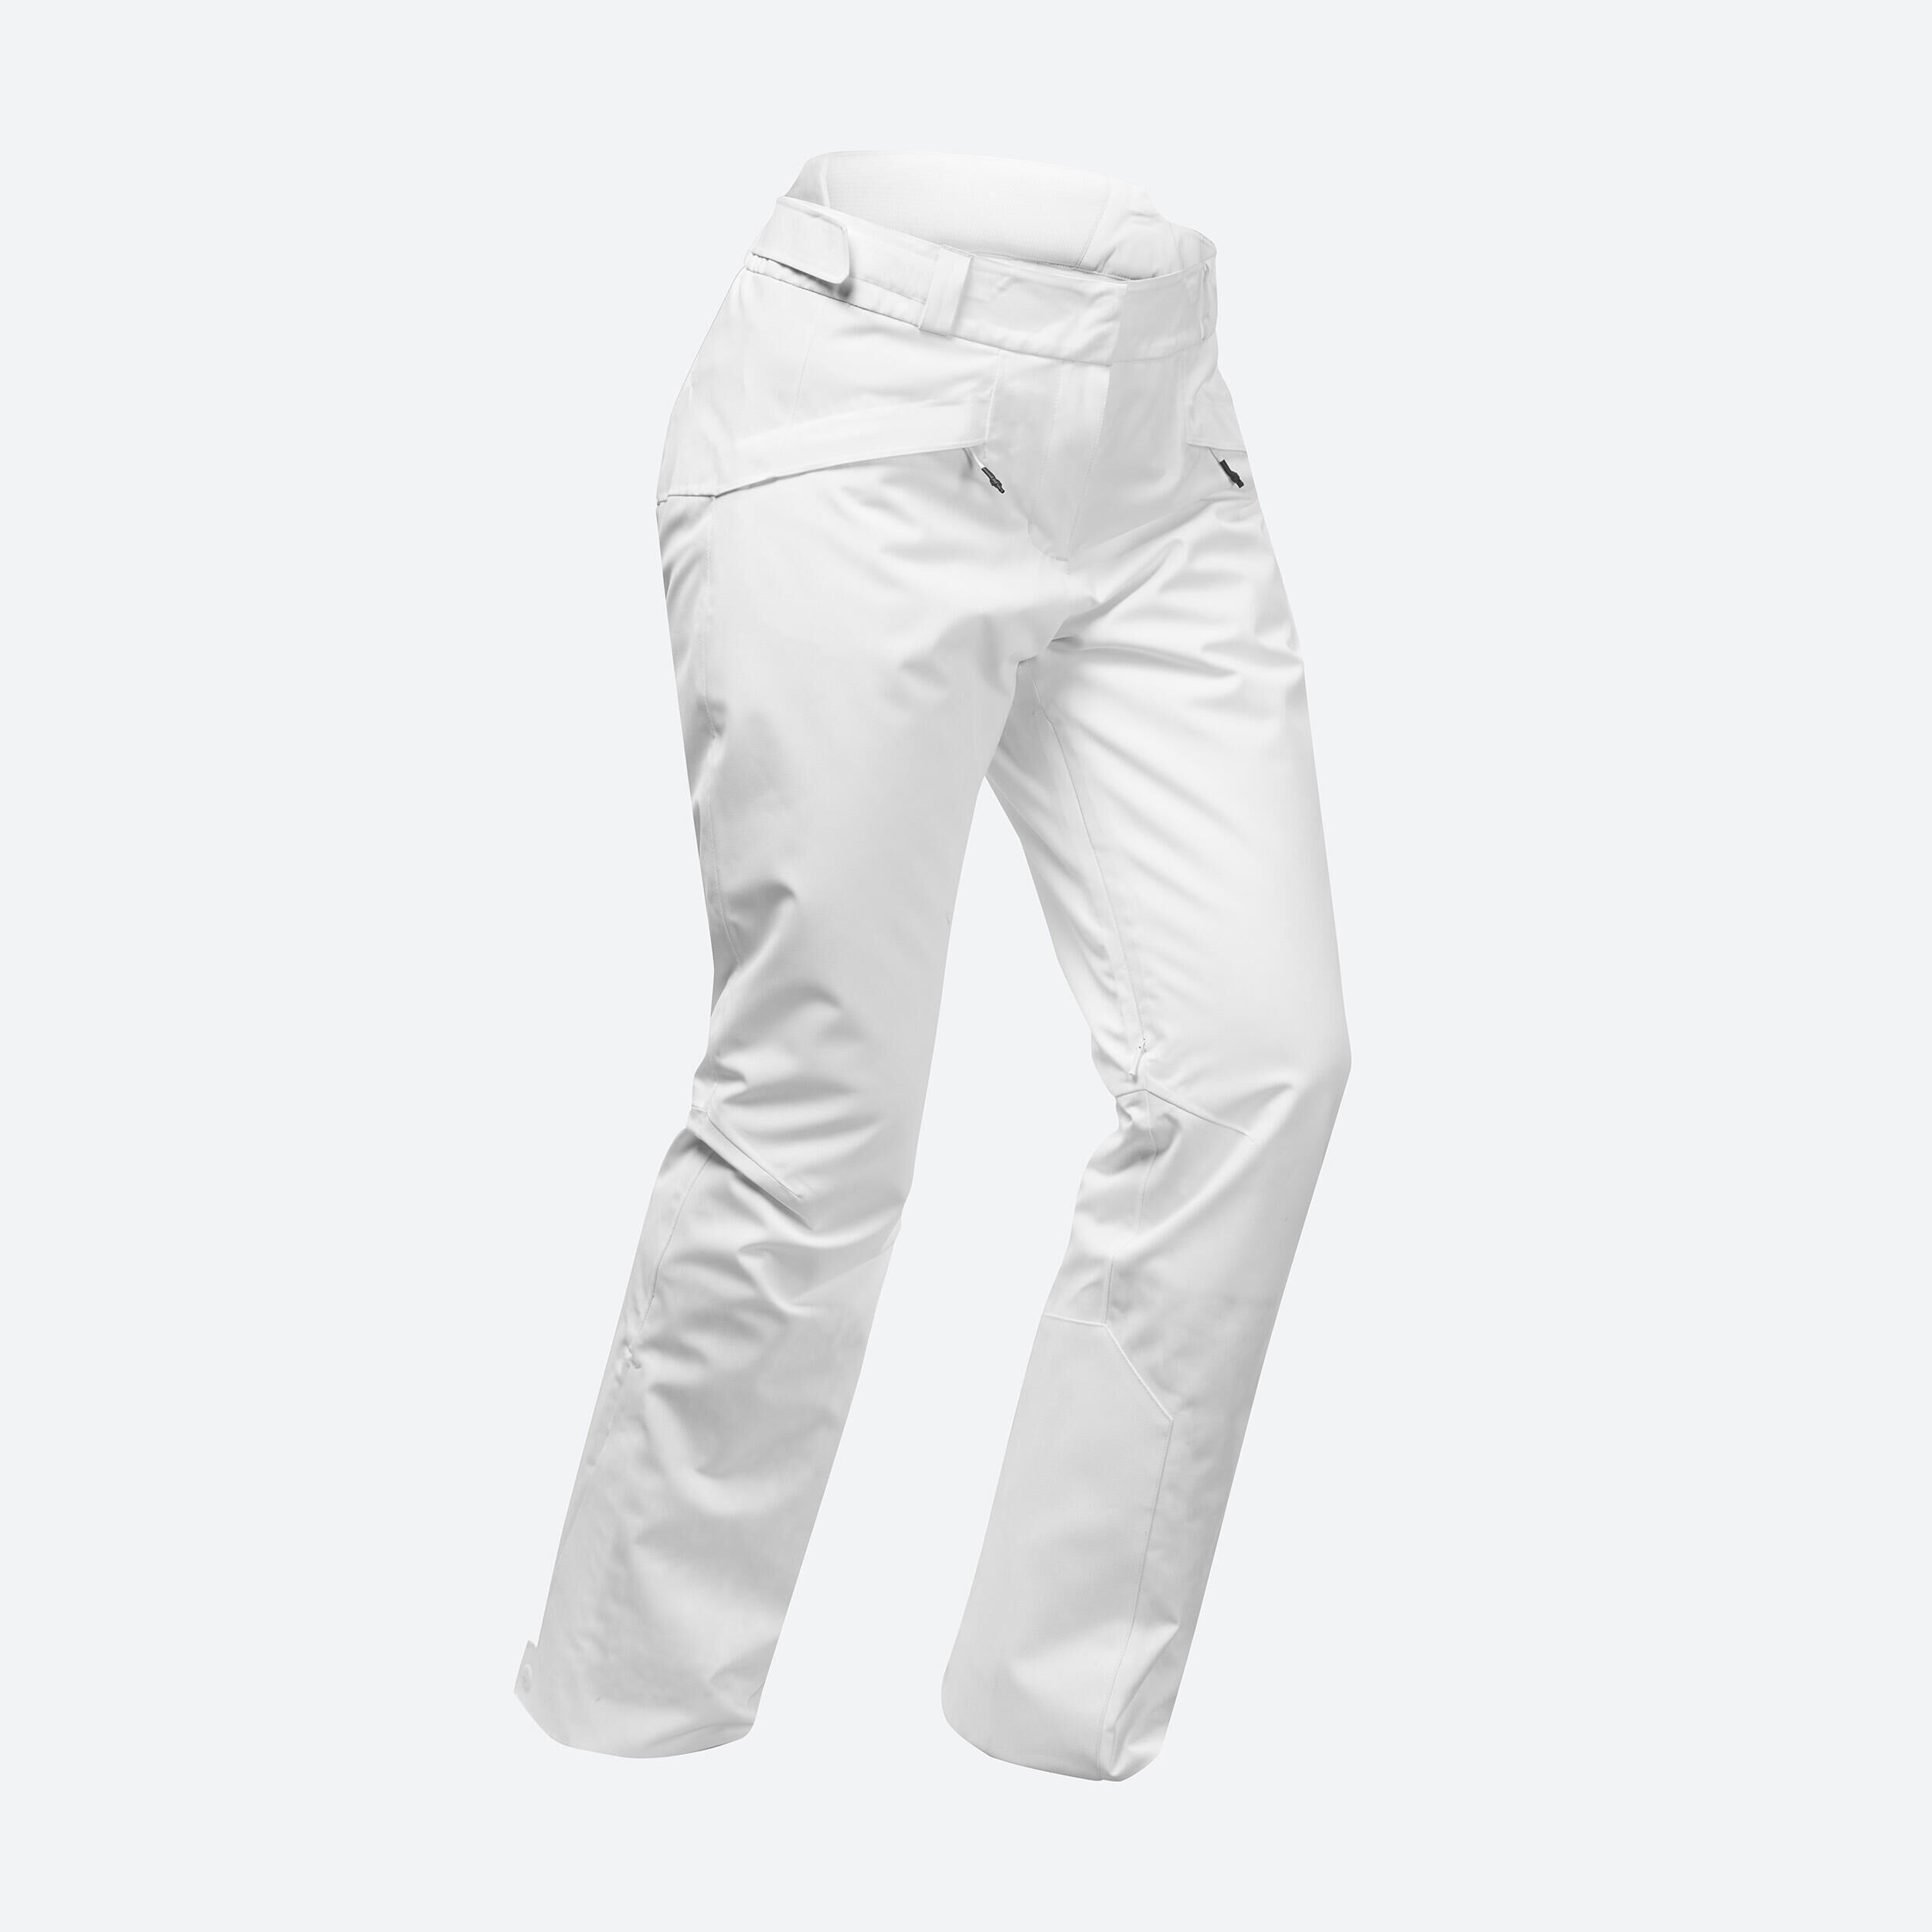 WEDZE Refurbished Womens Warm Ski Trousers 580 - White - A Grade